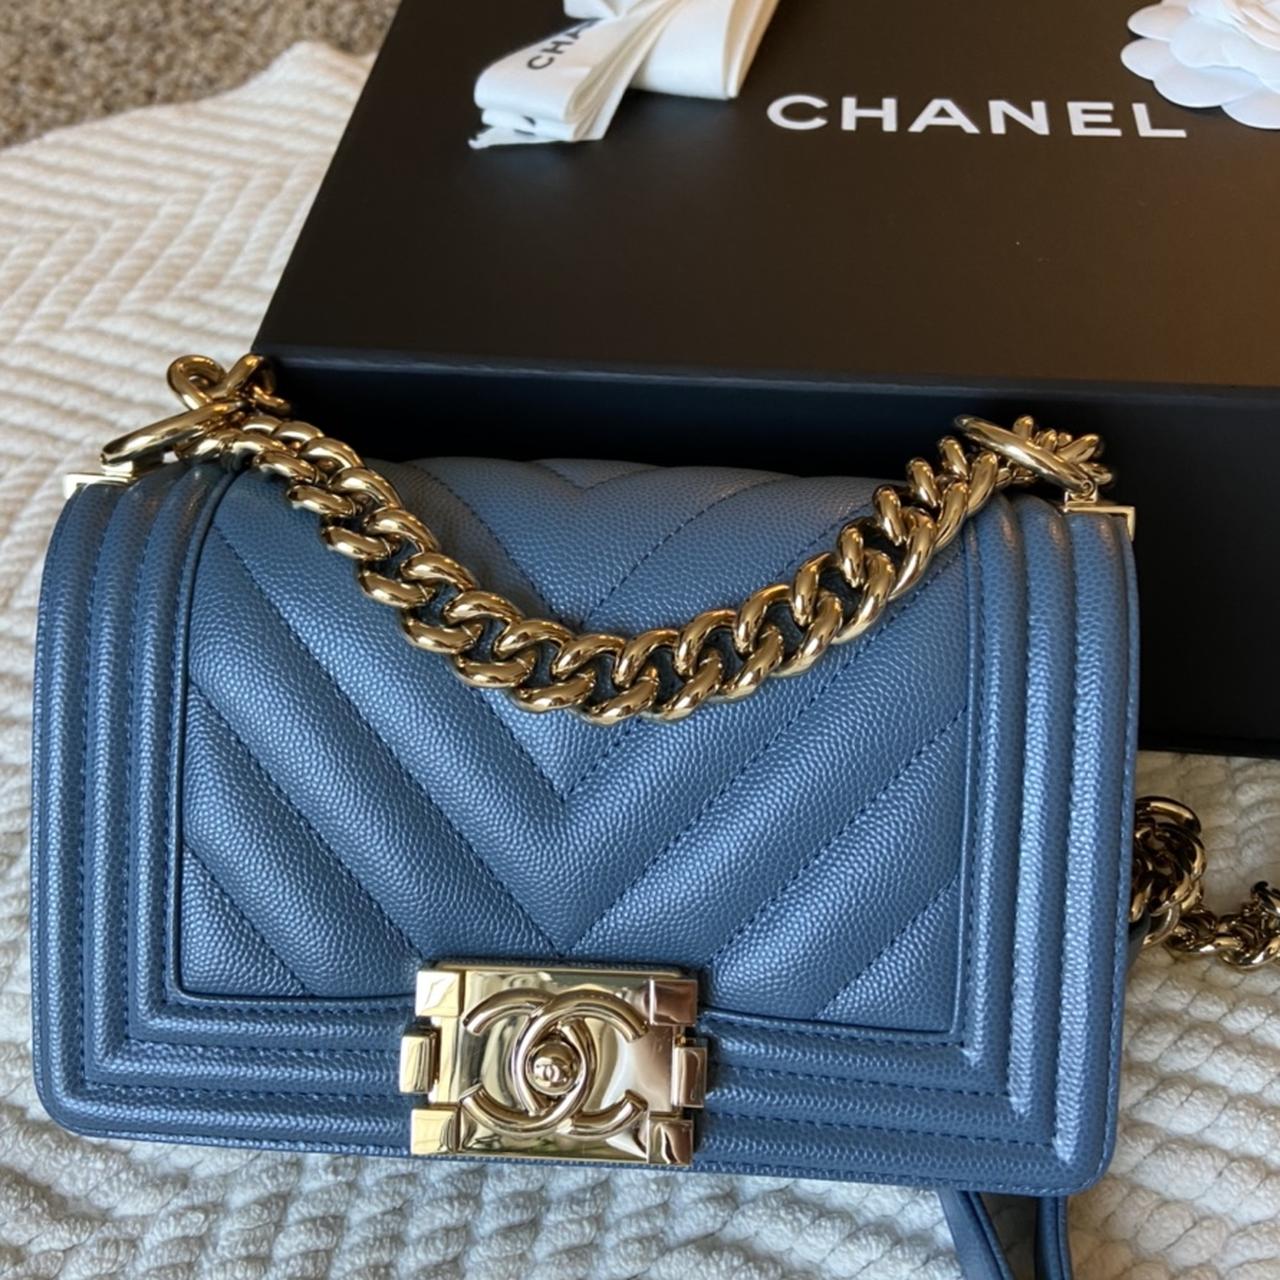 Chanel boy bag small size Used a few times, amazing - Depop